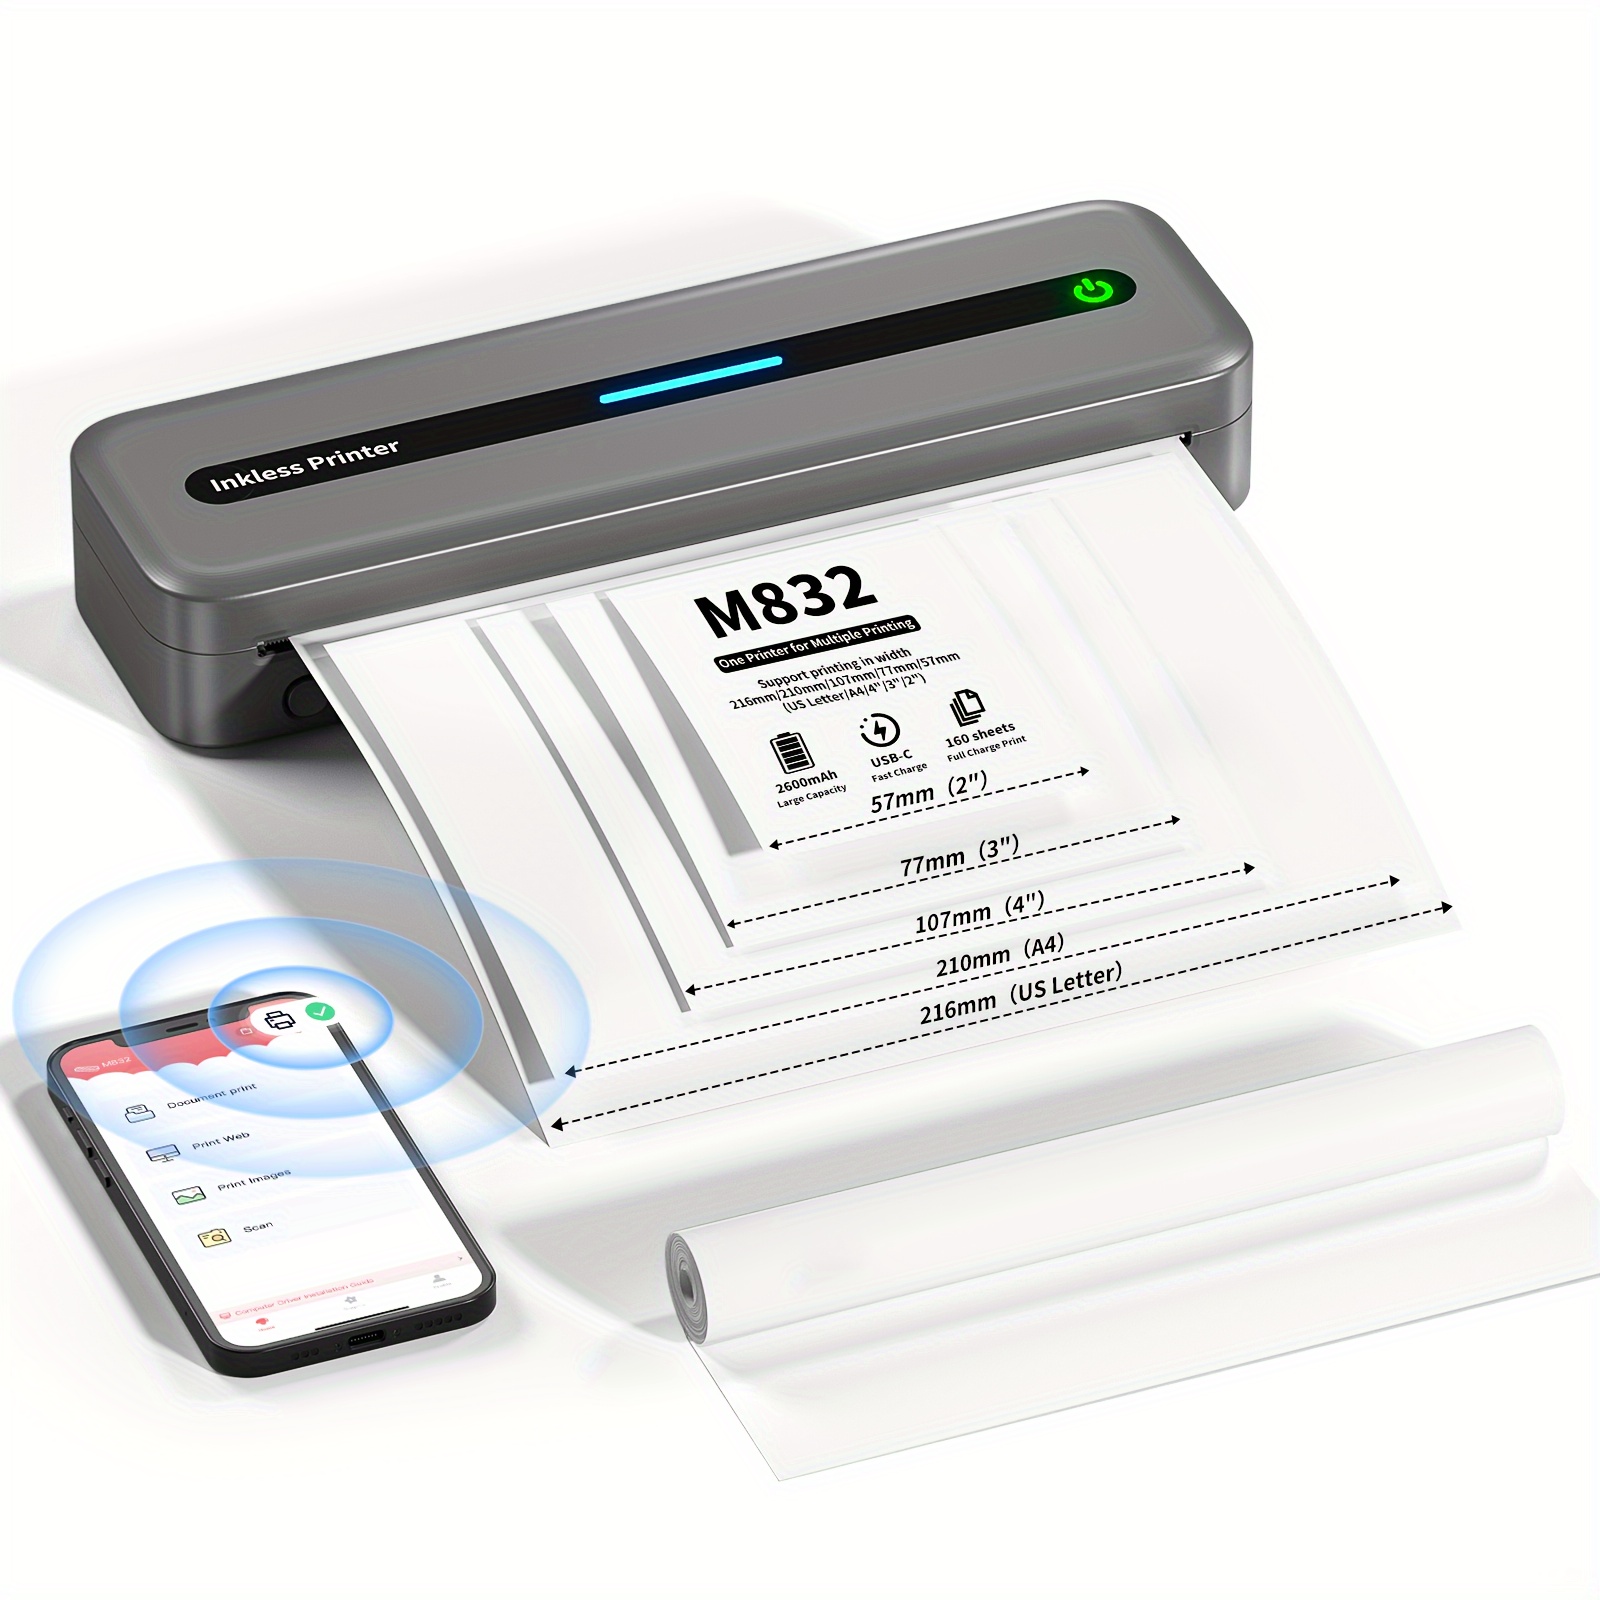 Impresoras portátiles inalámbricas para mini impresora de viaje, impresora  móvil Bluetooth, impresora térmica sin tinta, compatible con papel térmico